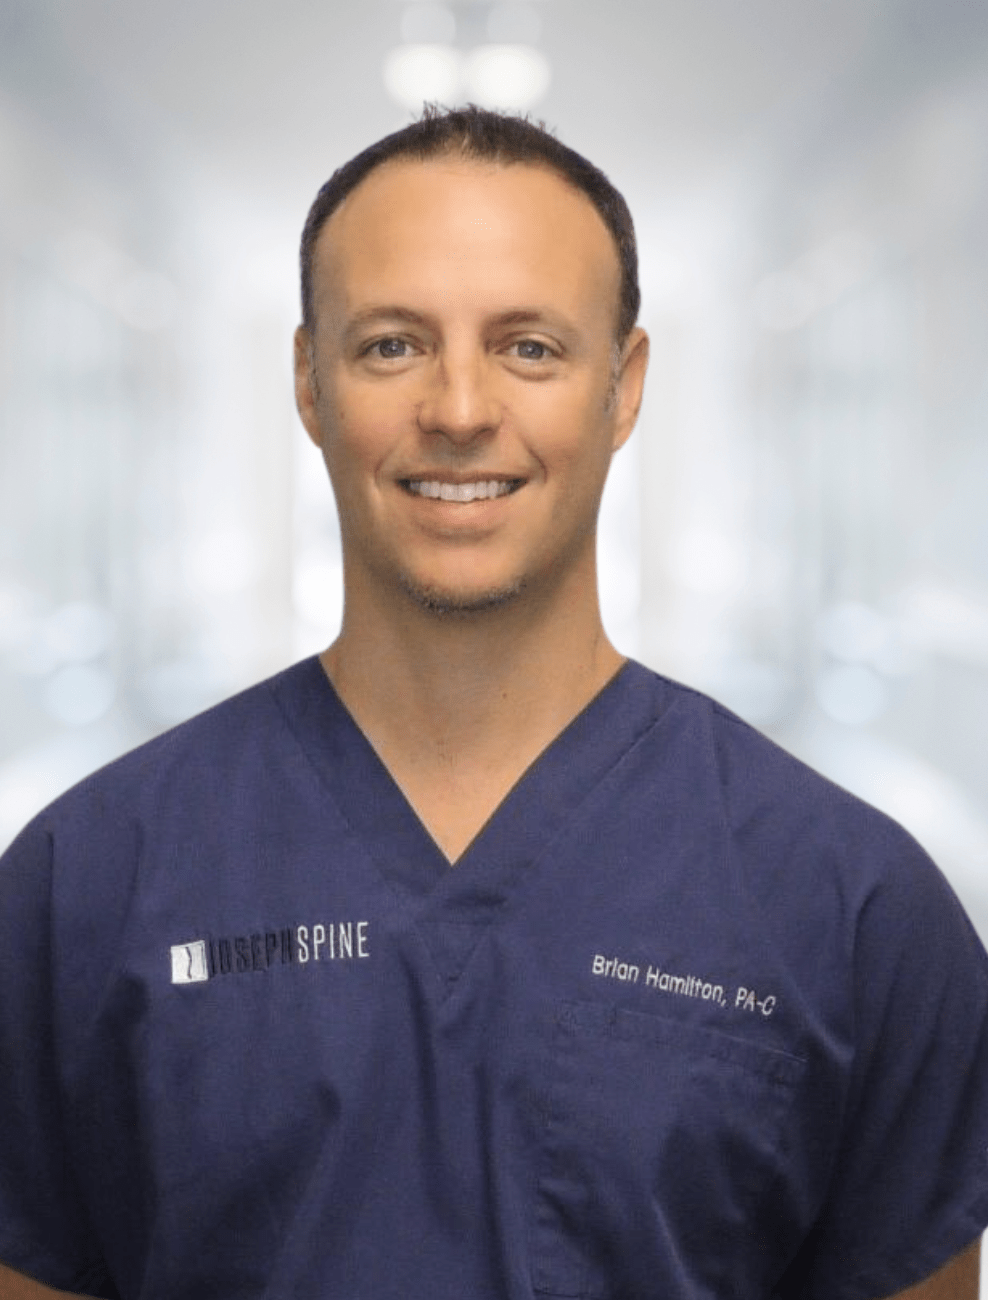 Brian Hamilton, physicians assistant Joseph Spine Institute